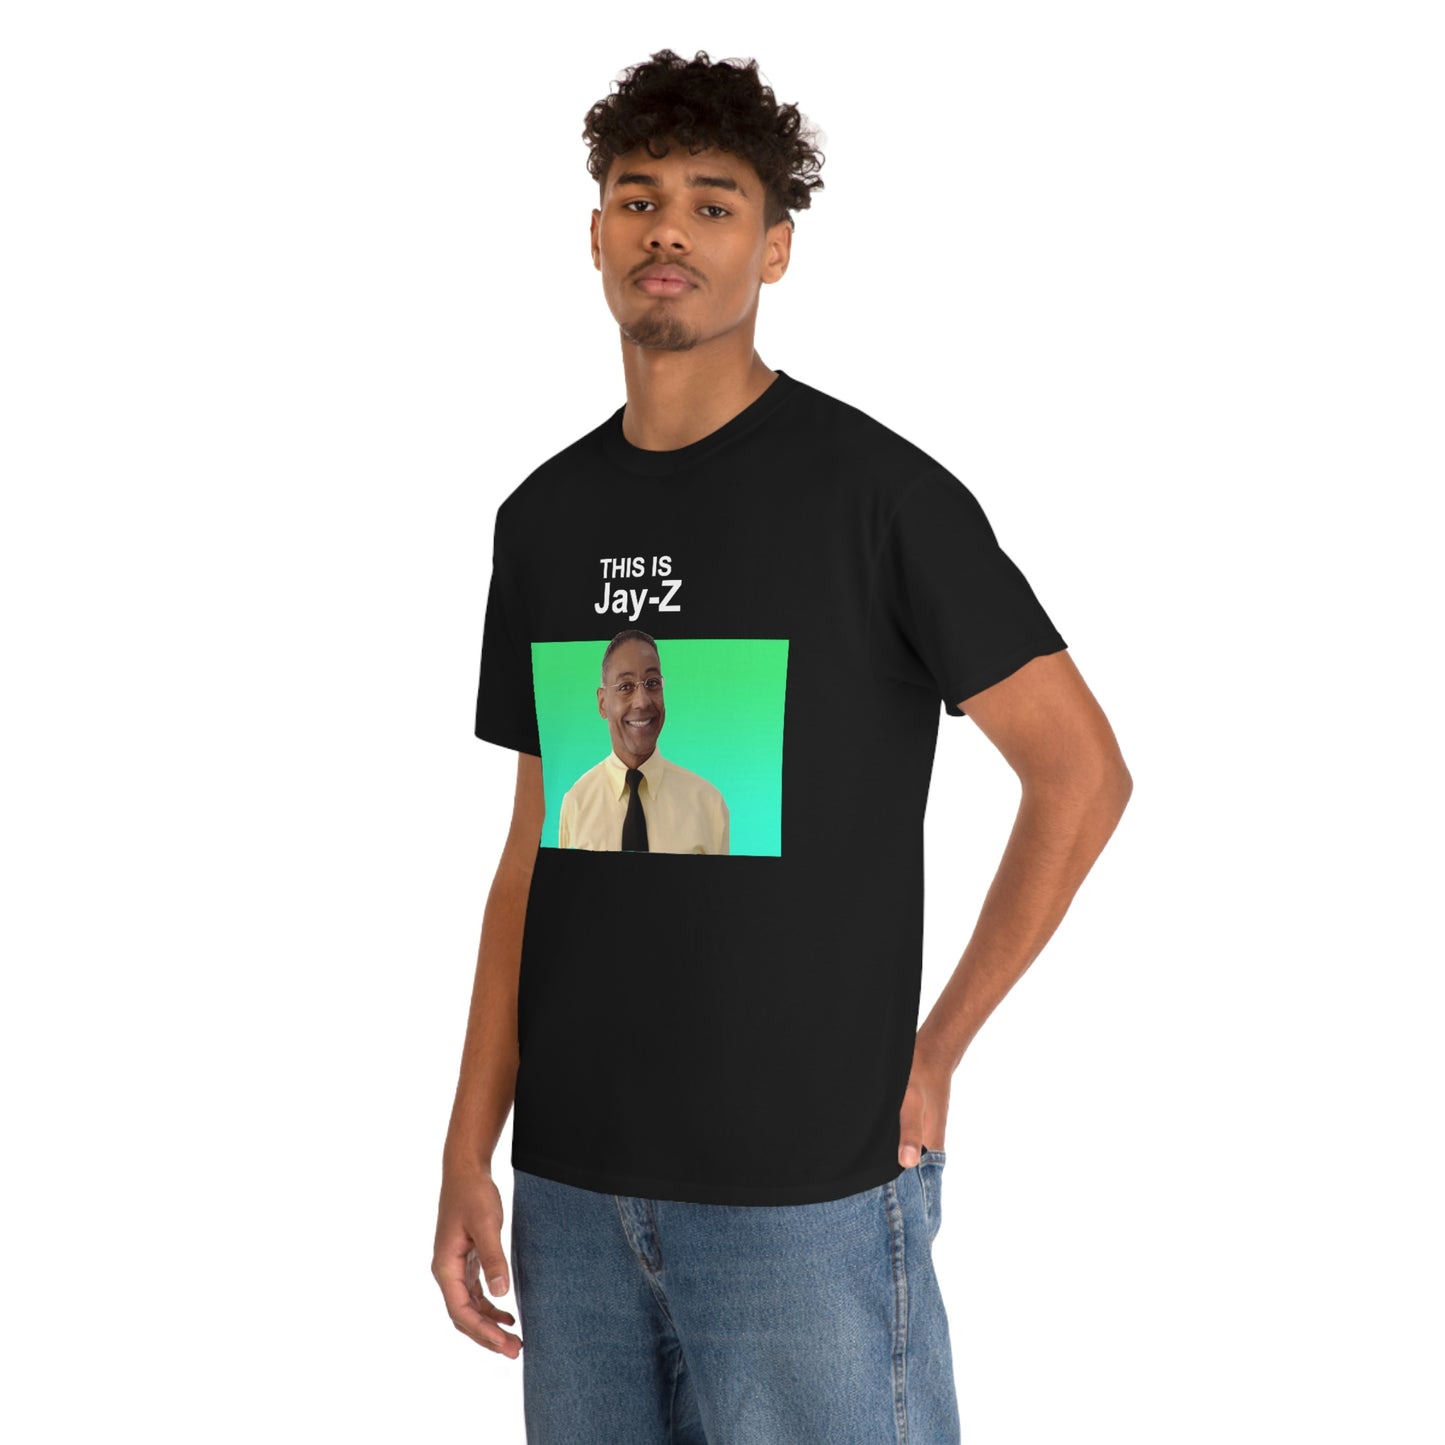 Jay-Z Tshirt